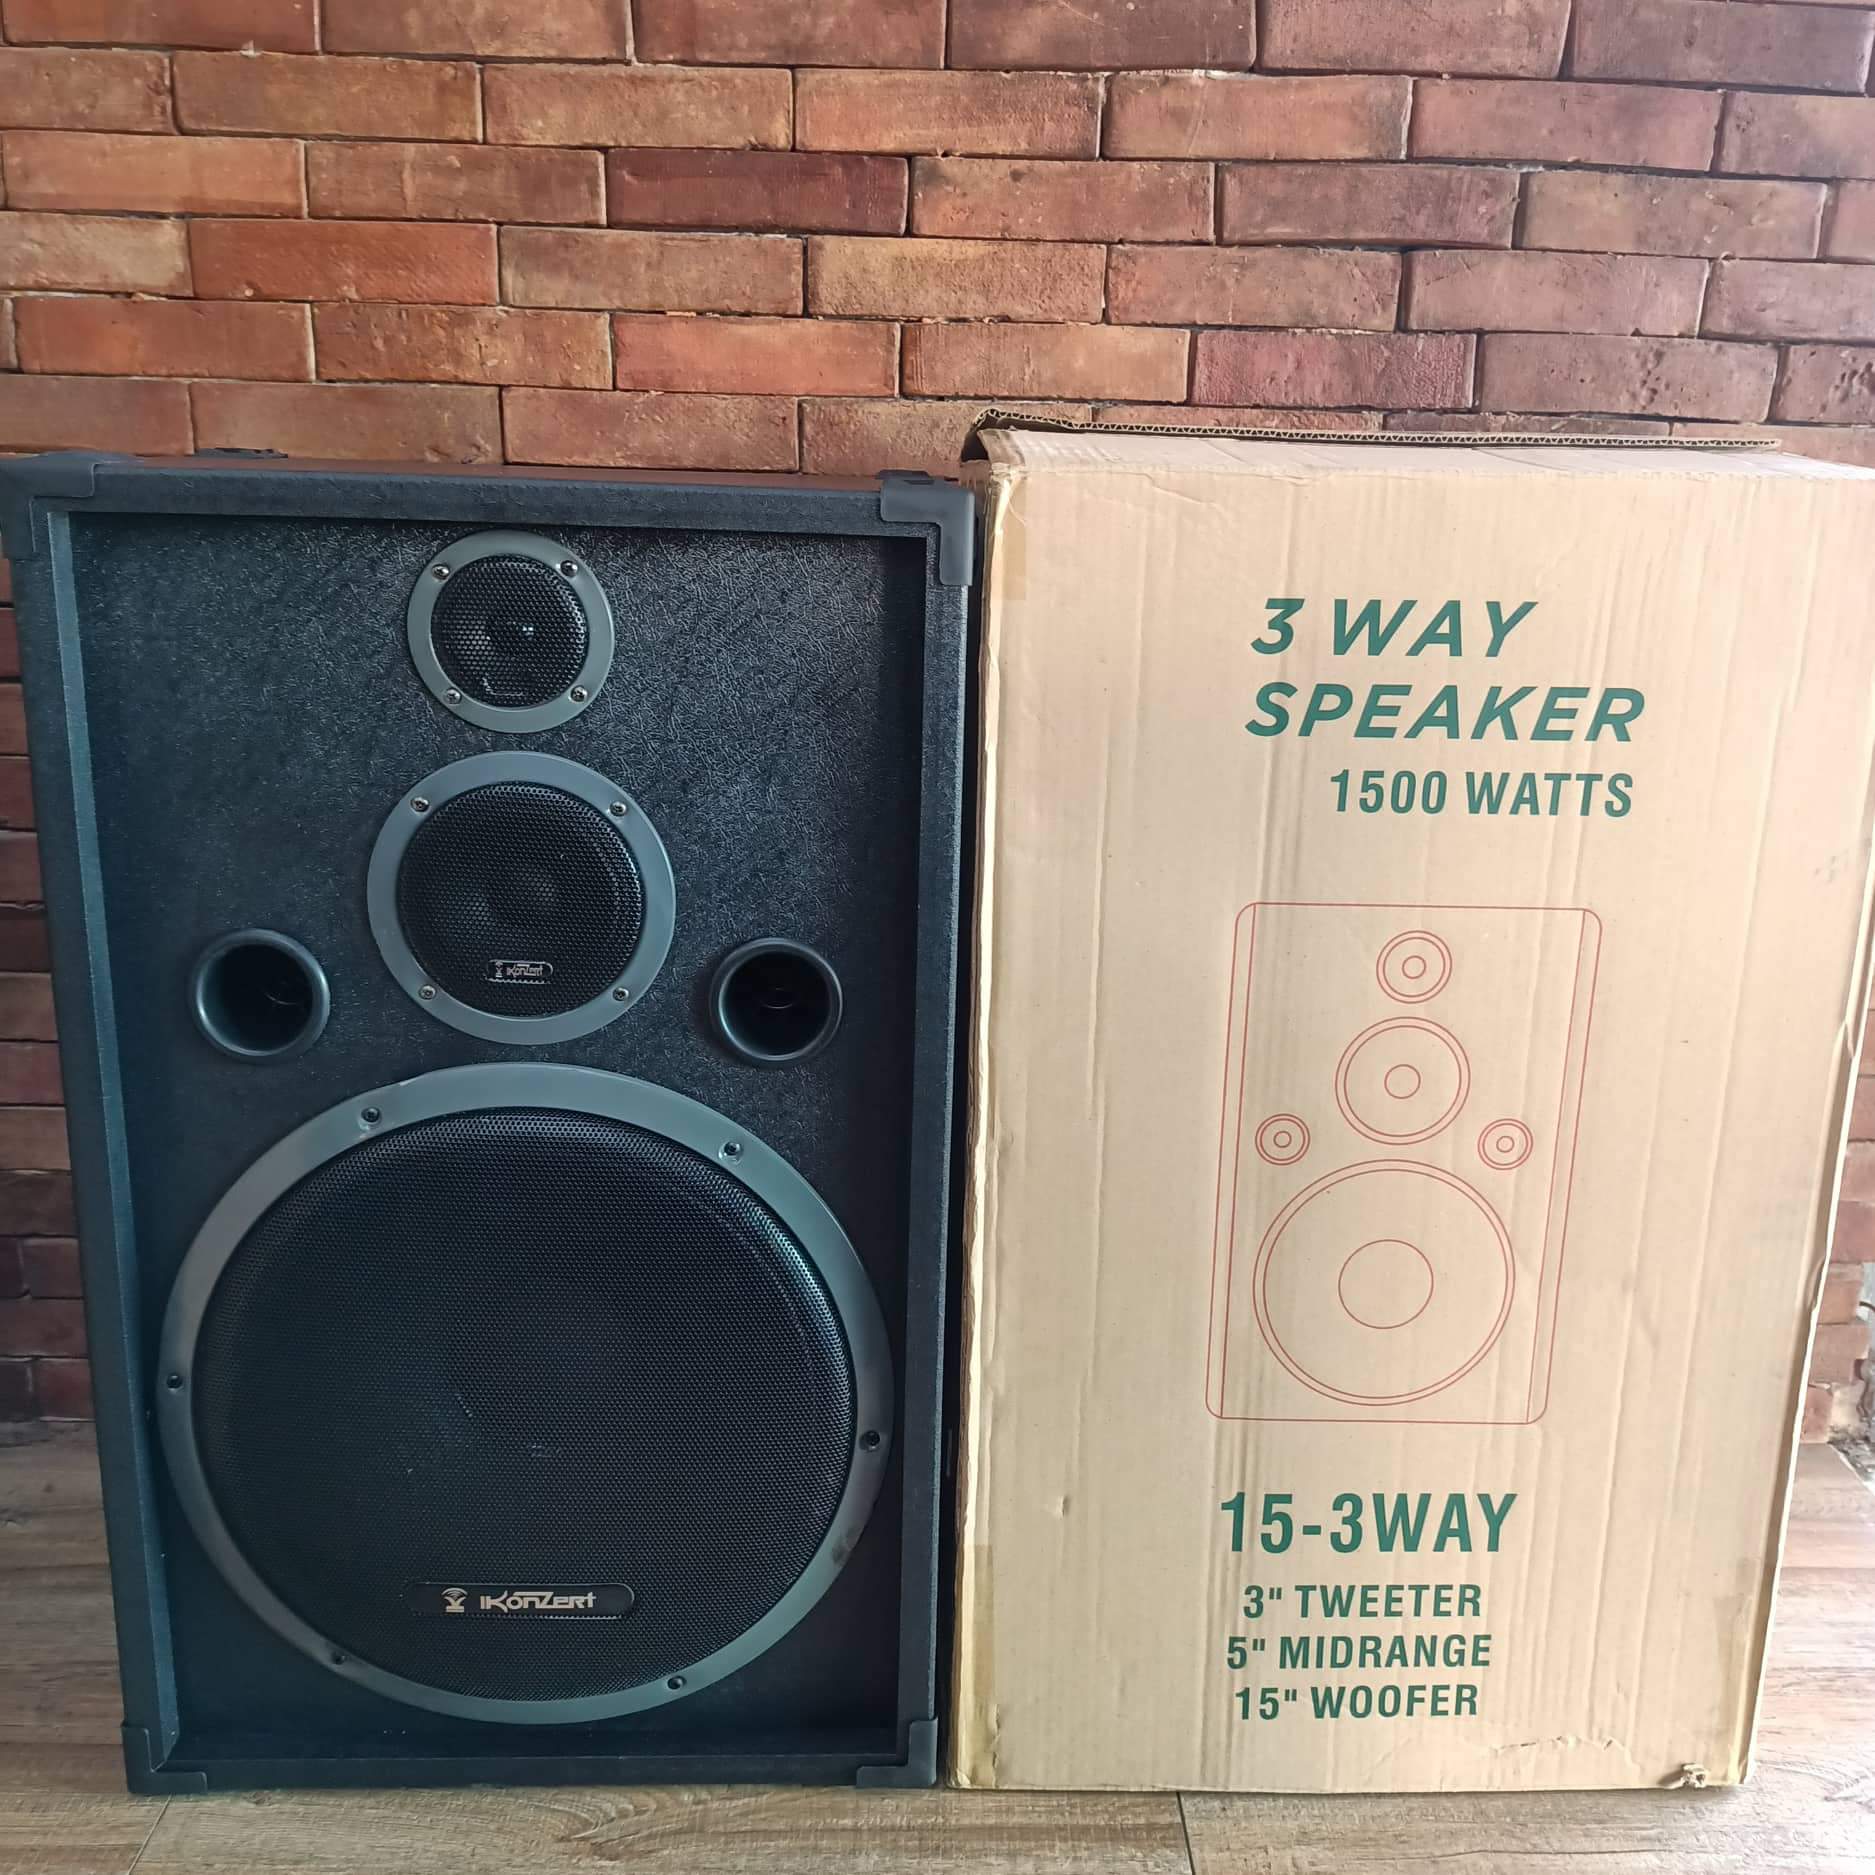 Kunzert  Pair  Speaker   Good Sound Quality